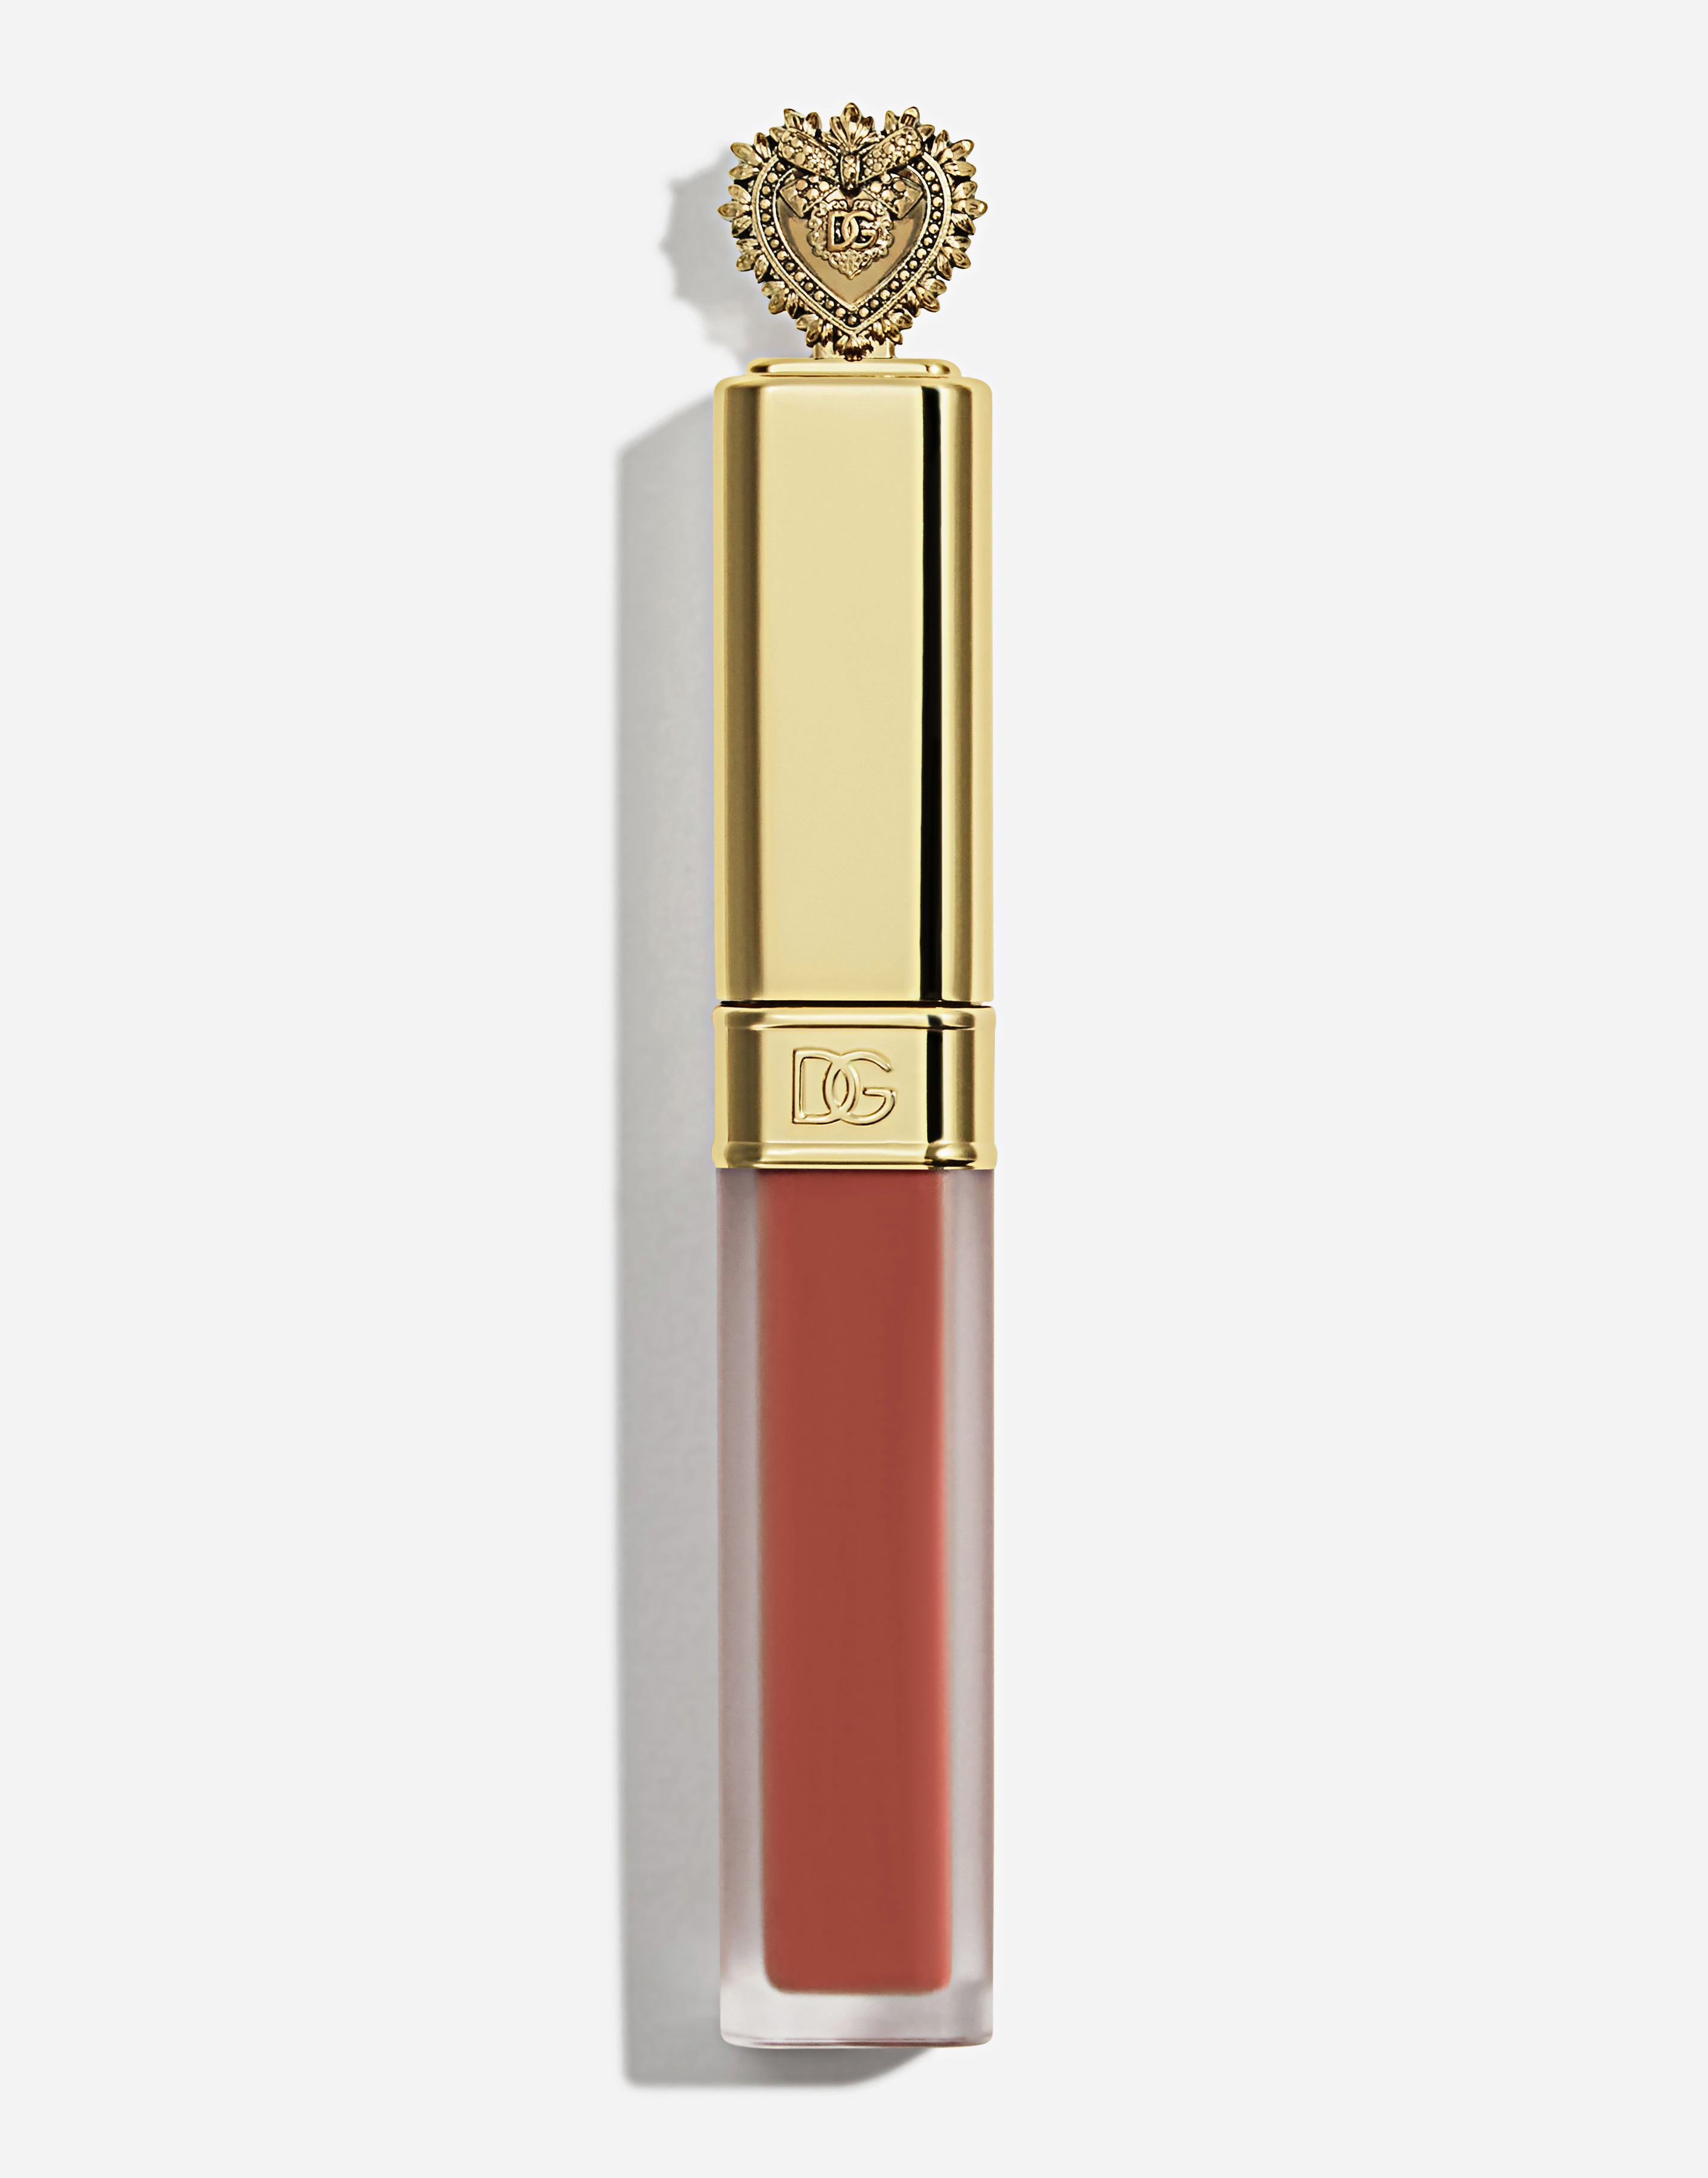 Dolce & Gabbana Devotion Liquid Lipstick In Mousse In 110 Generositá